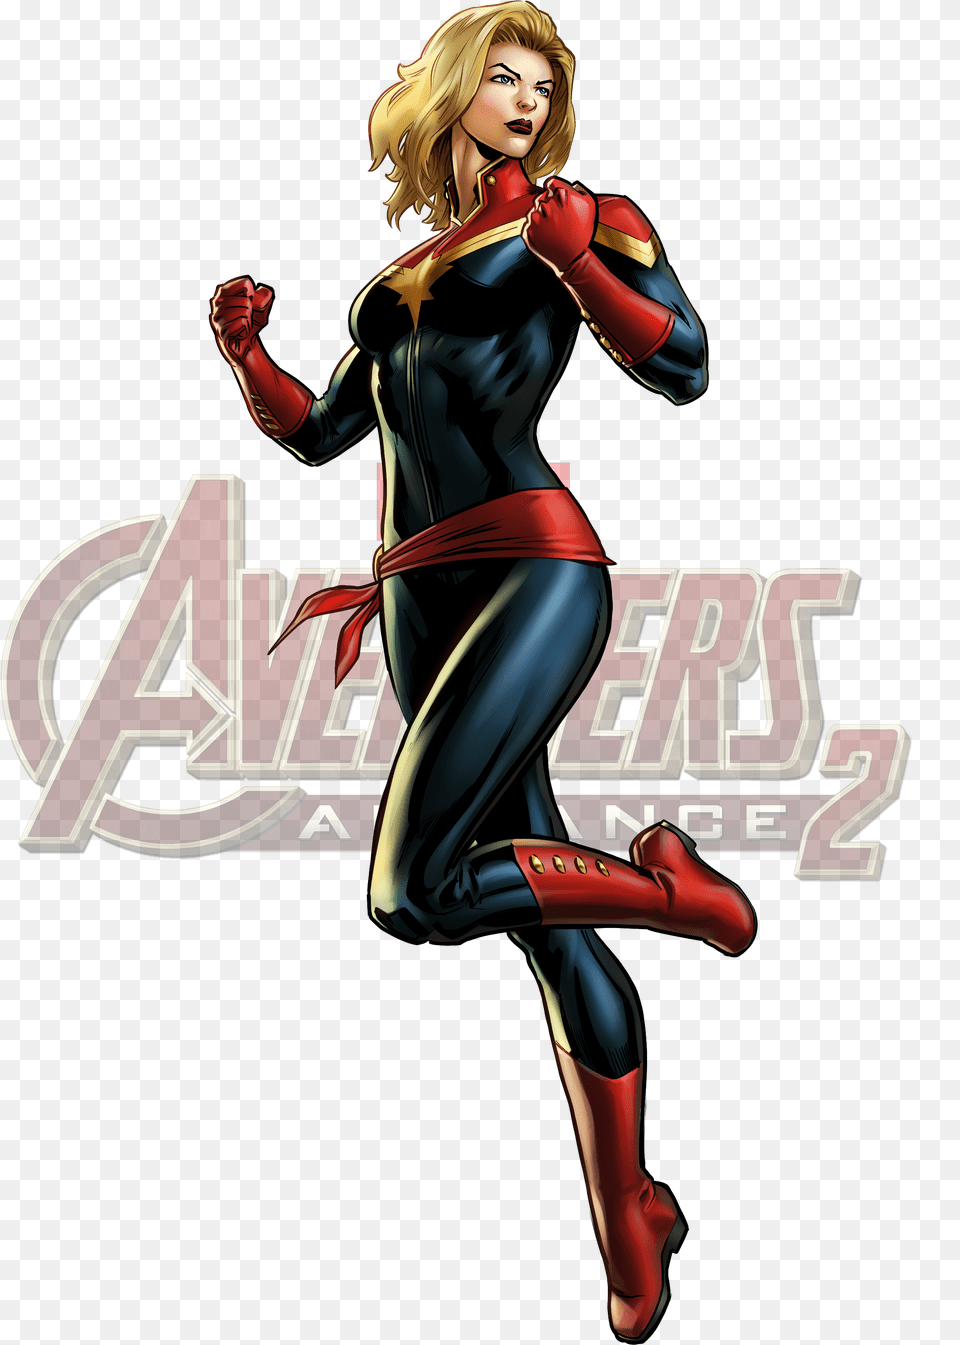 Marvel Avengers Alliance 2 Iron Man, Adult, Publication, Person, Female Png